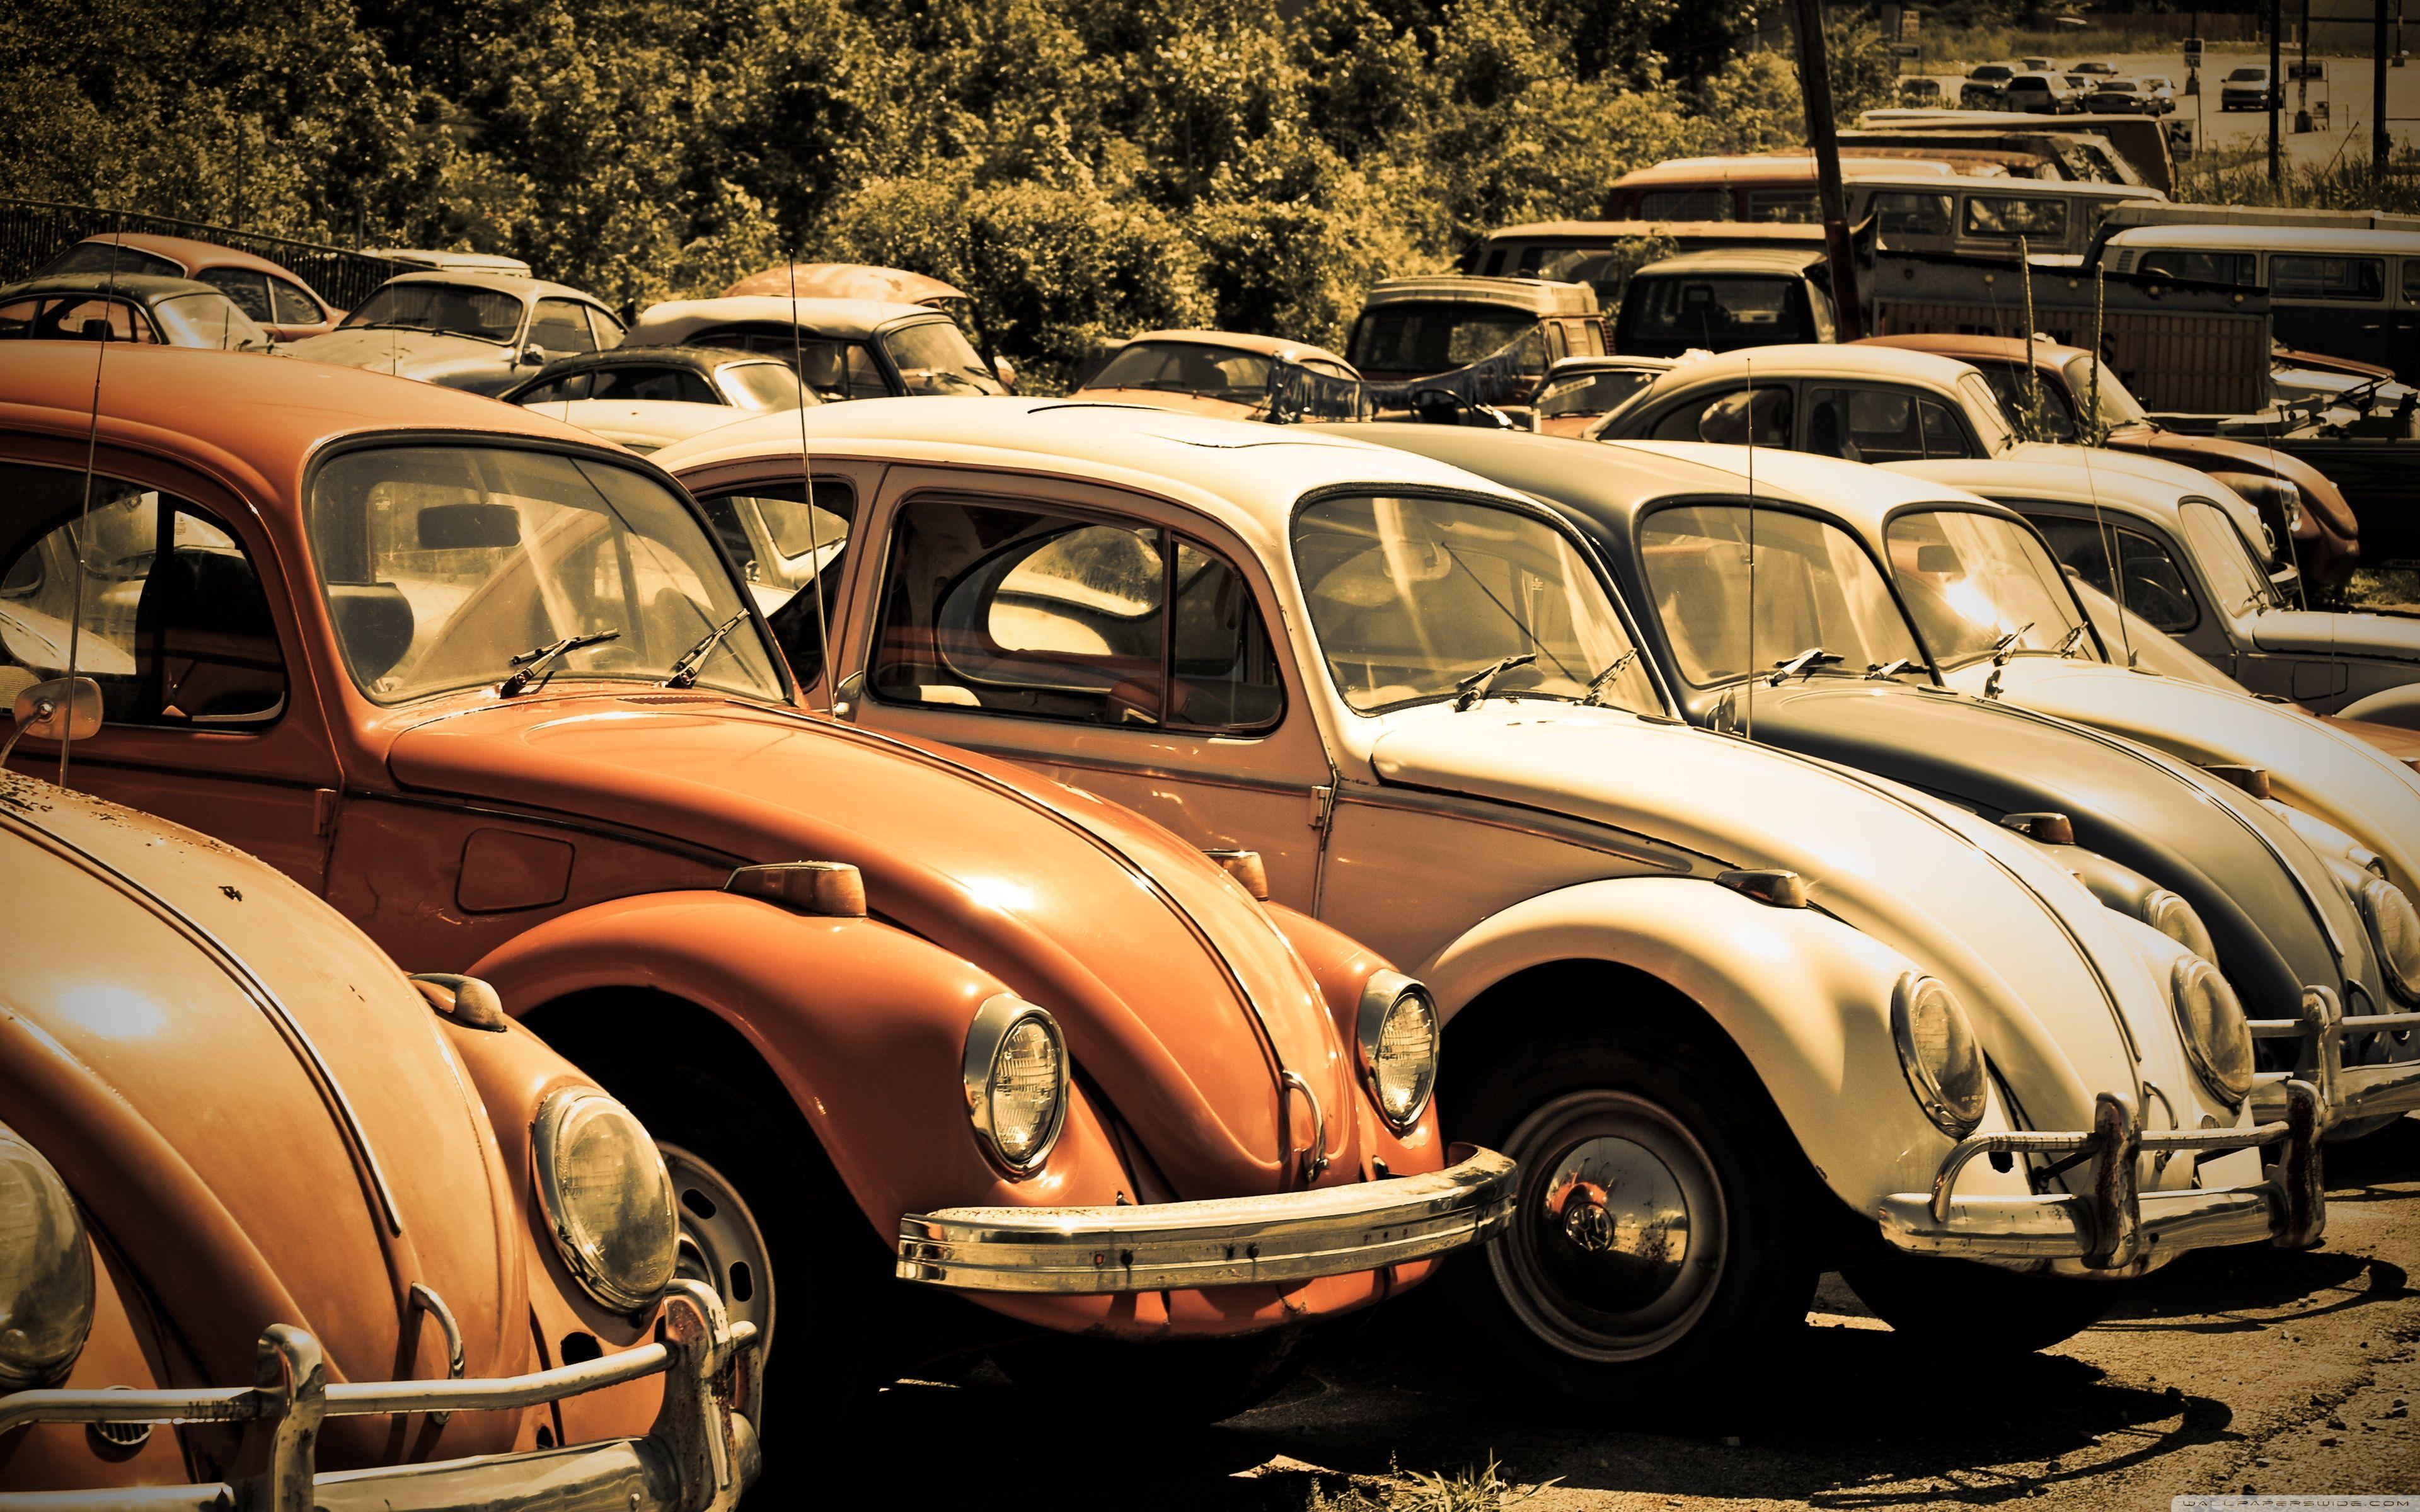 Old Volkswagen Beetle Junkyard HD desktop wallpaper, High